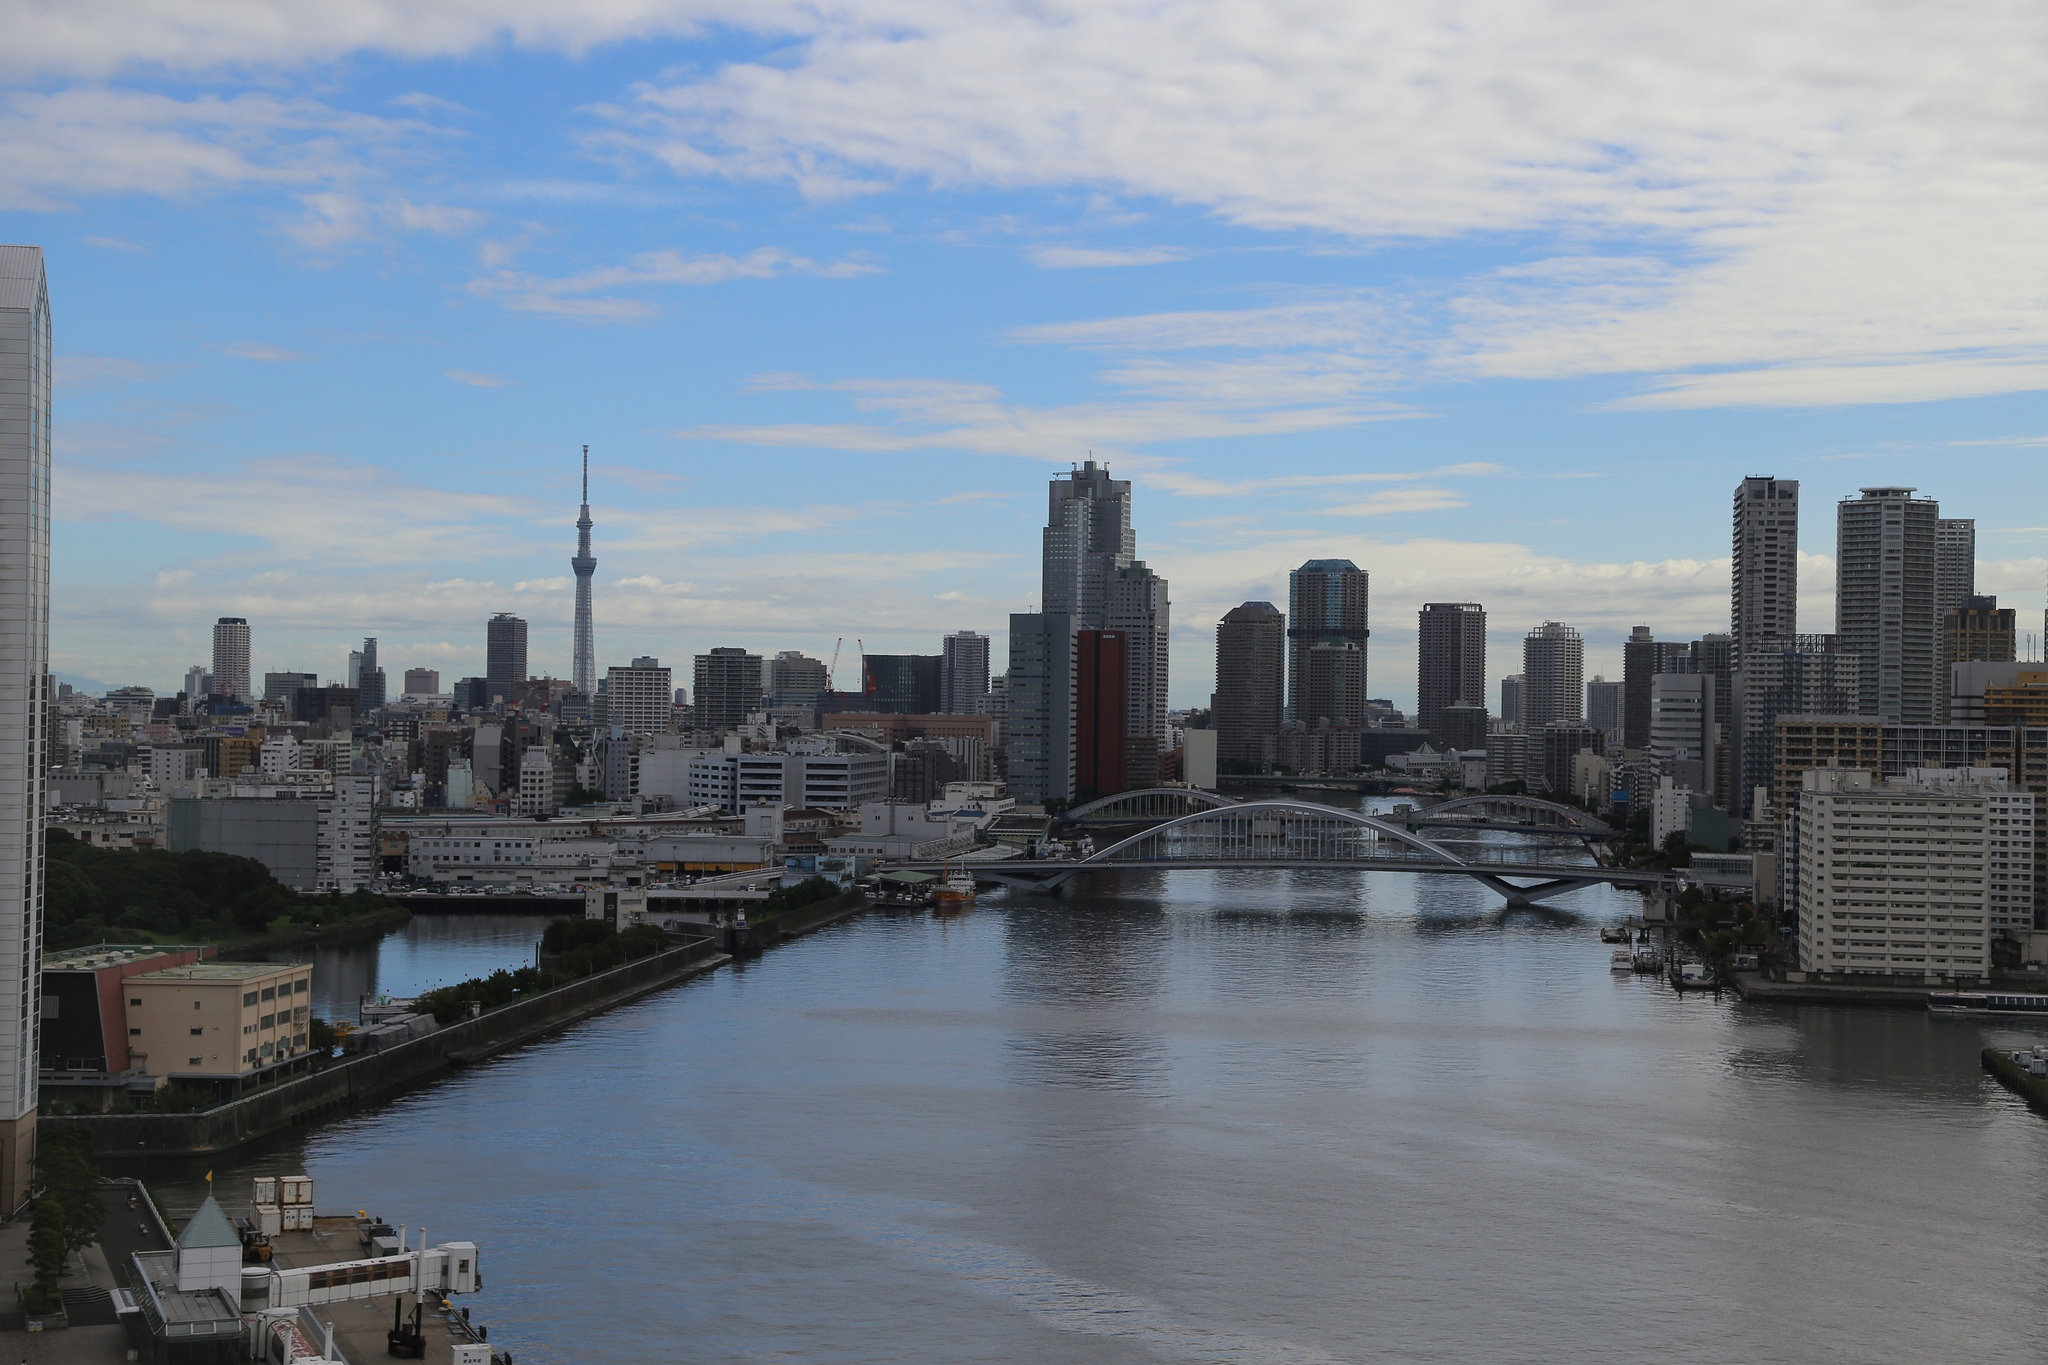 Skyline of Tokyo over river.